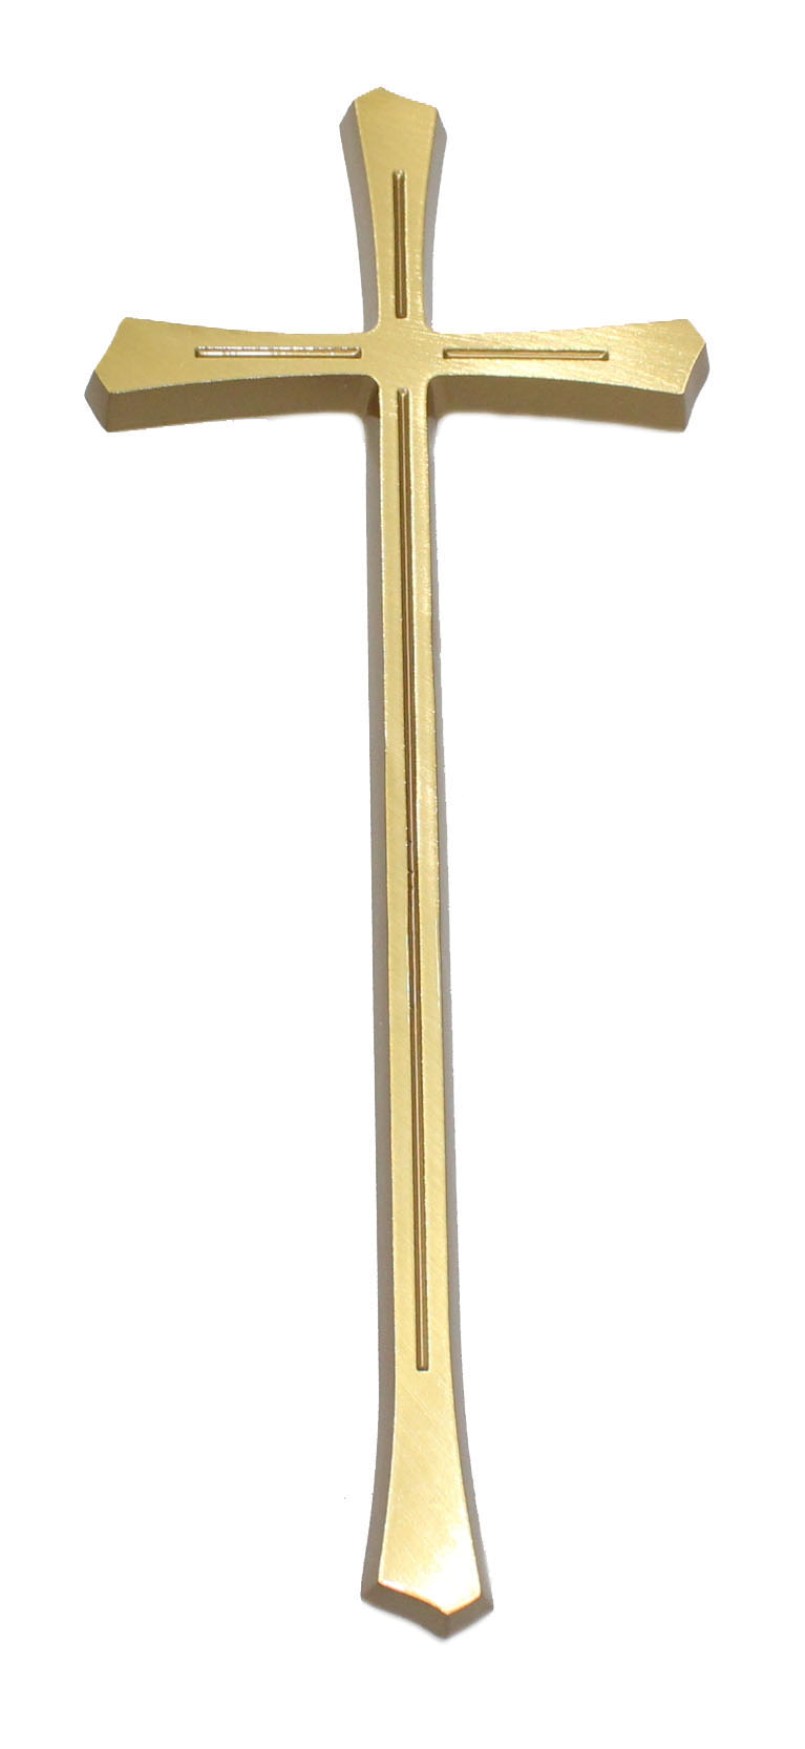 Krížik 2.B - zlatý - výška  30 cm